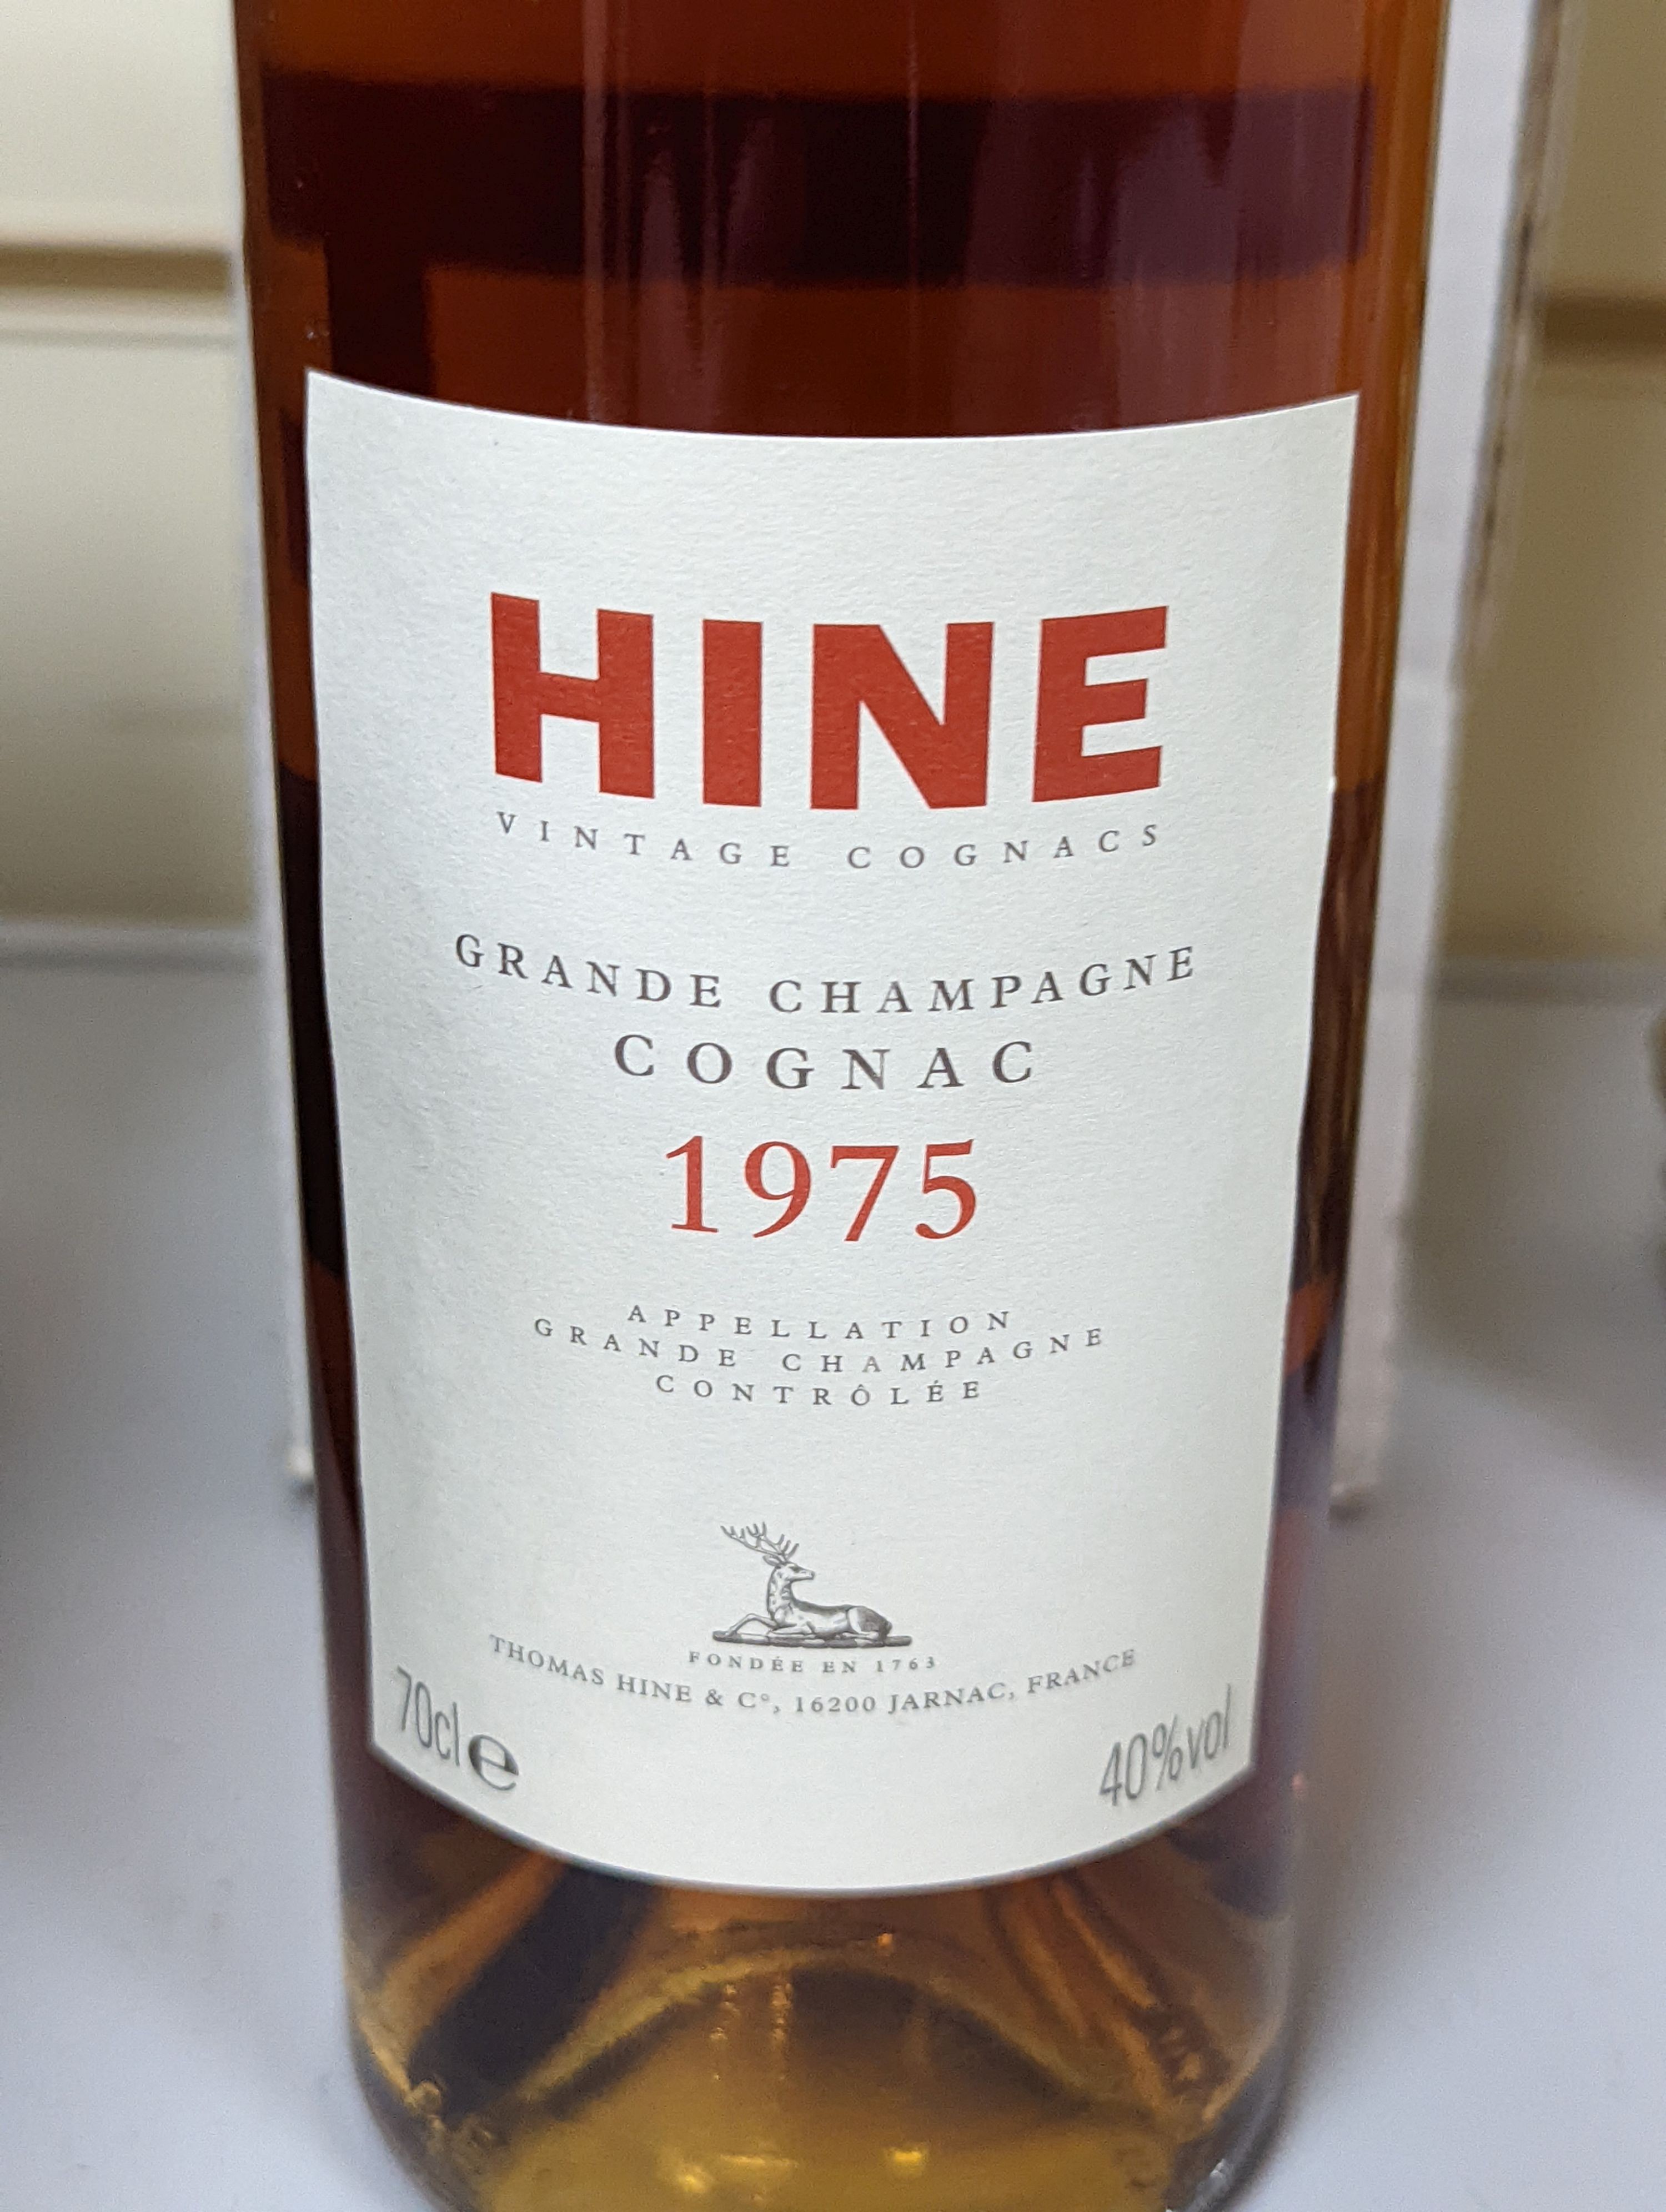 One bottle of Hine Grand Champagne Cognac, 1975. Original cardboard box.